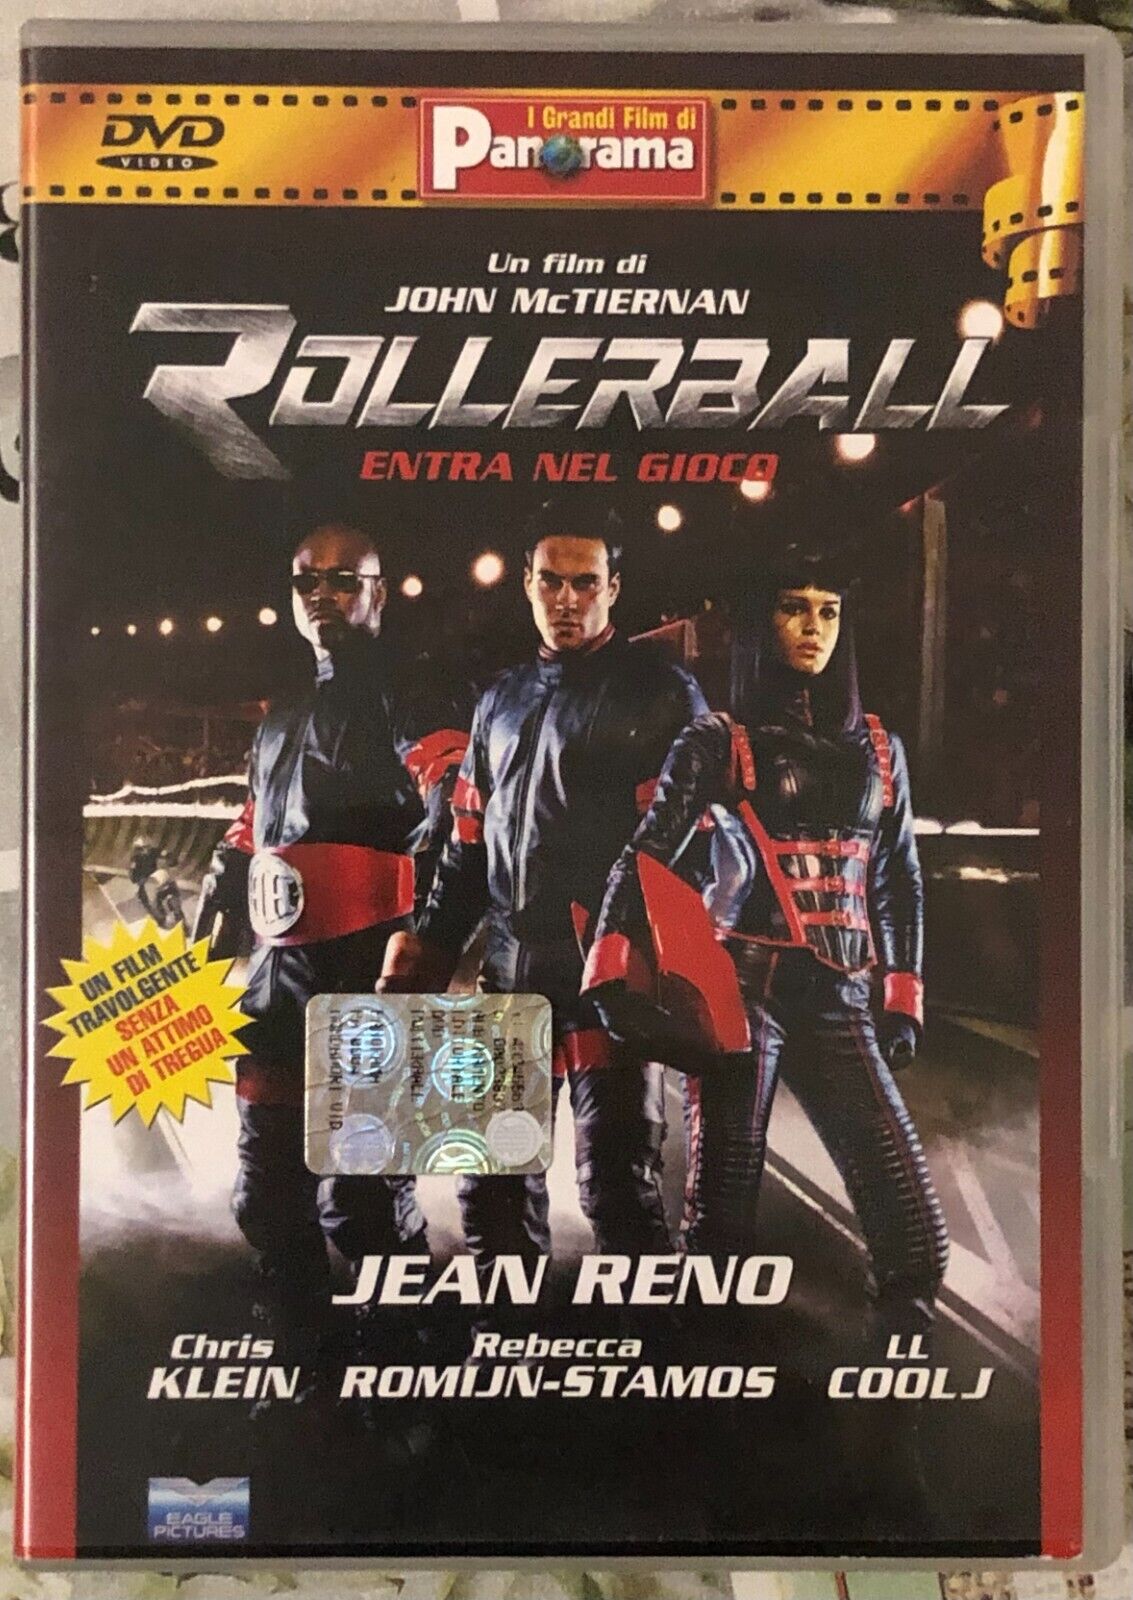 I grandi film di Panorama - Rollerball DVD di John Mctiernan, 2002, Eagle Pic